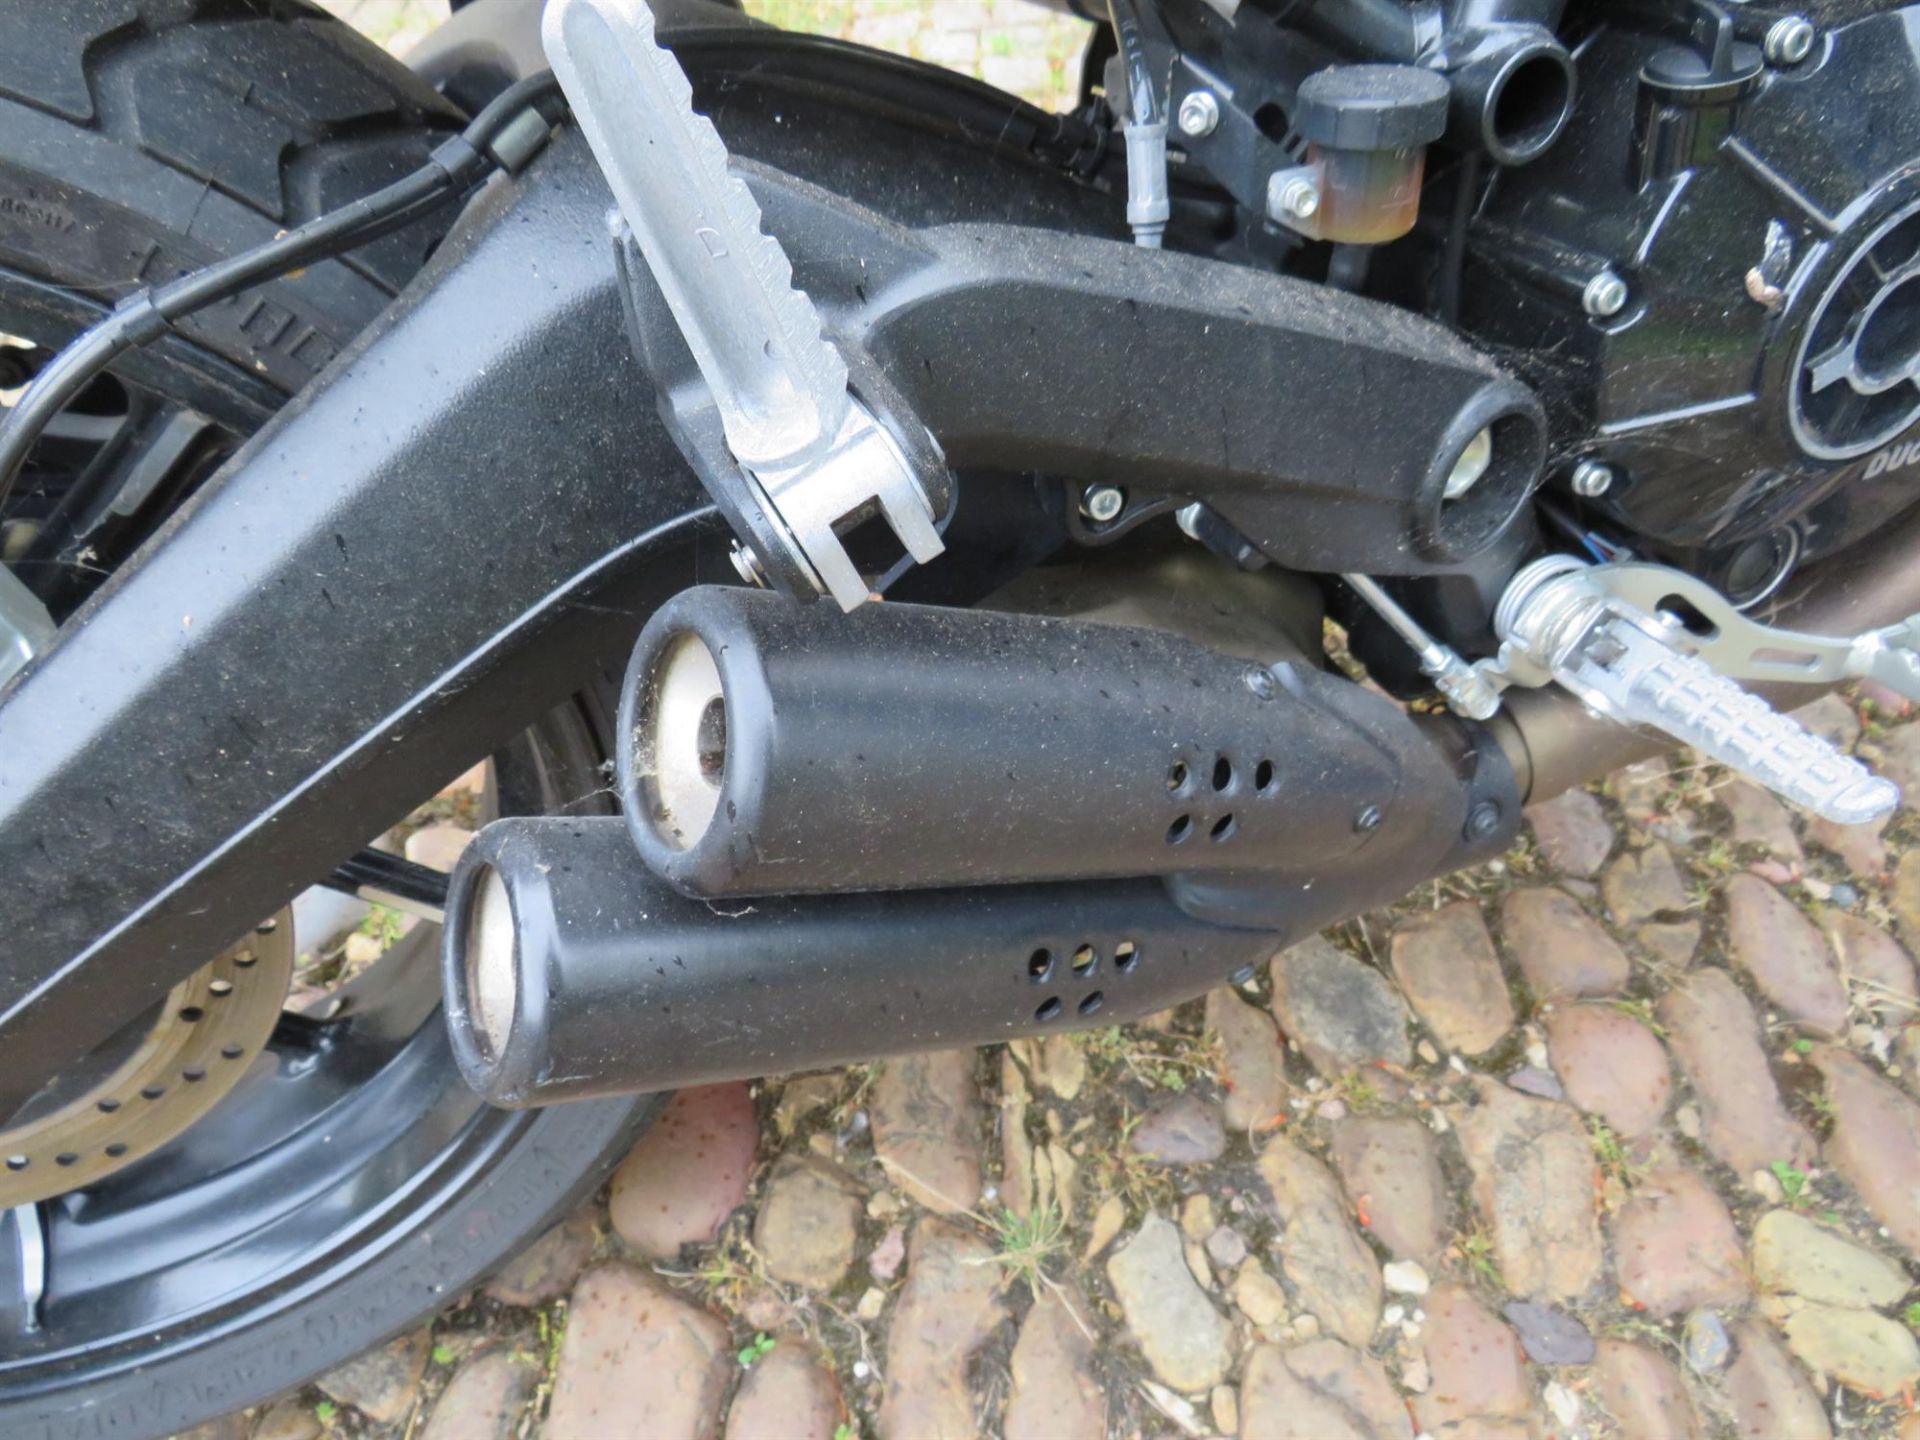 2019 Ducati Scrambler Full Throttle 803cc - Image 9 of 10